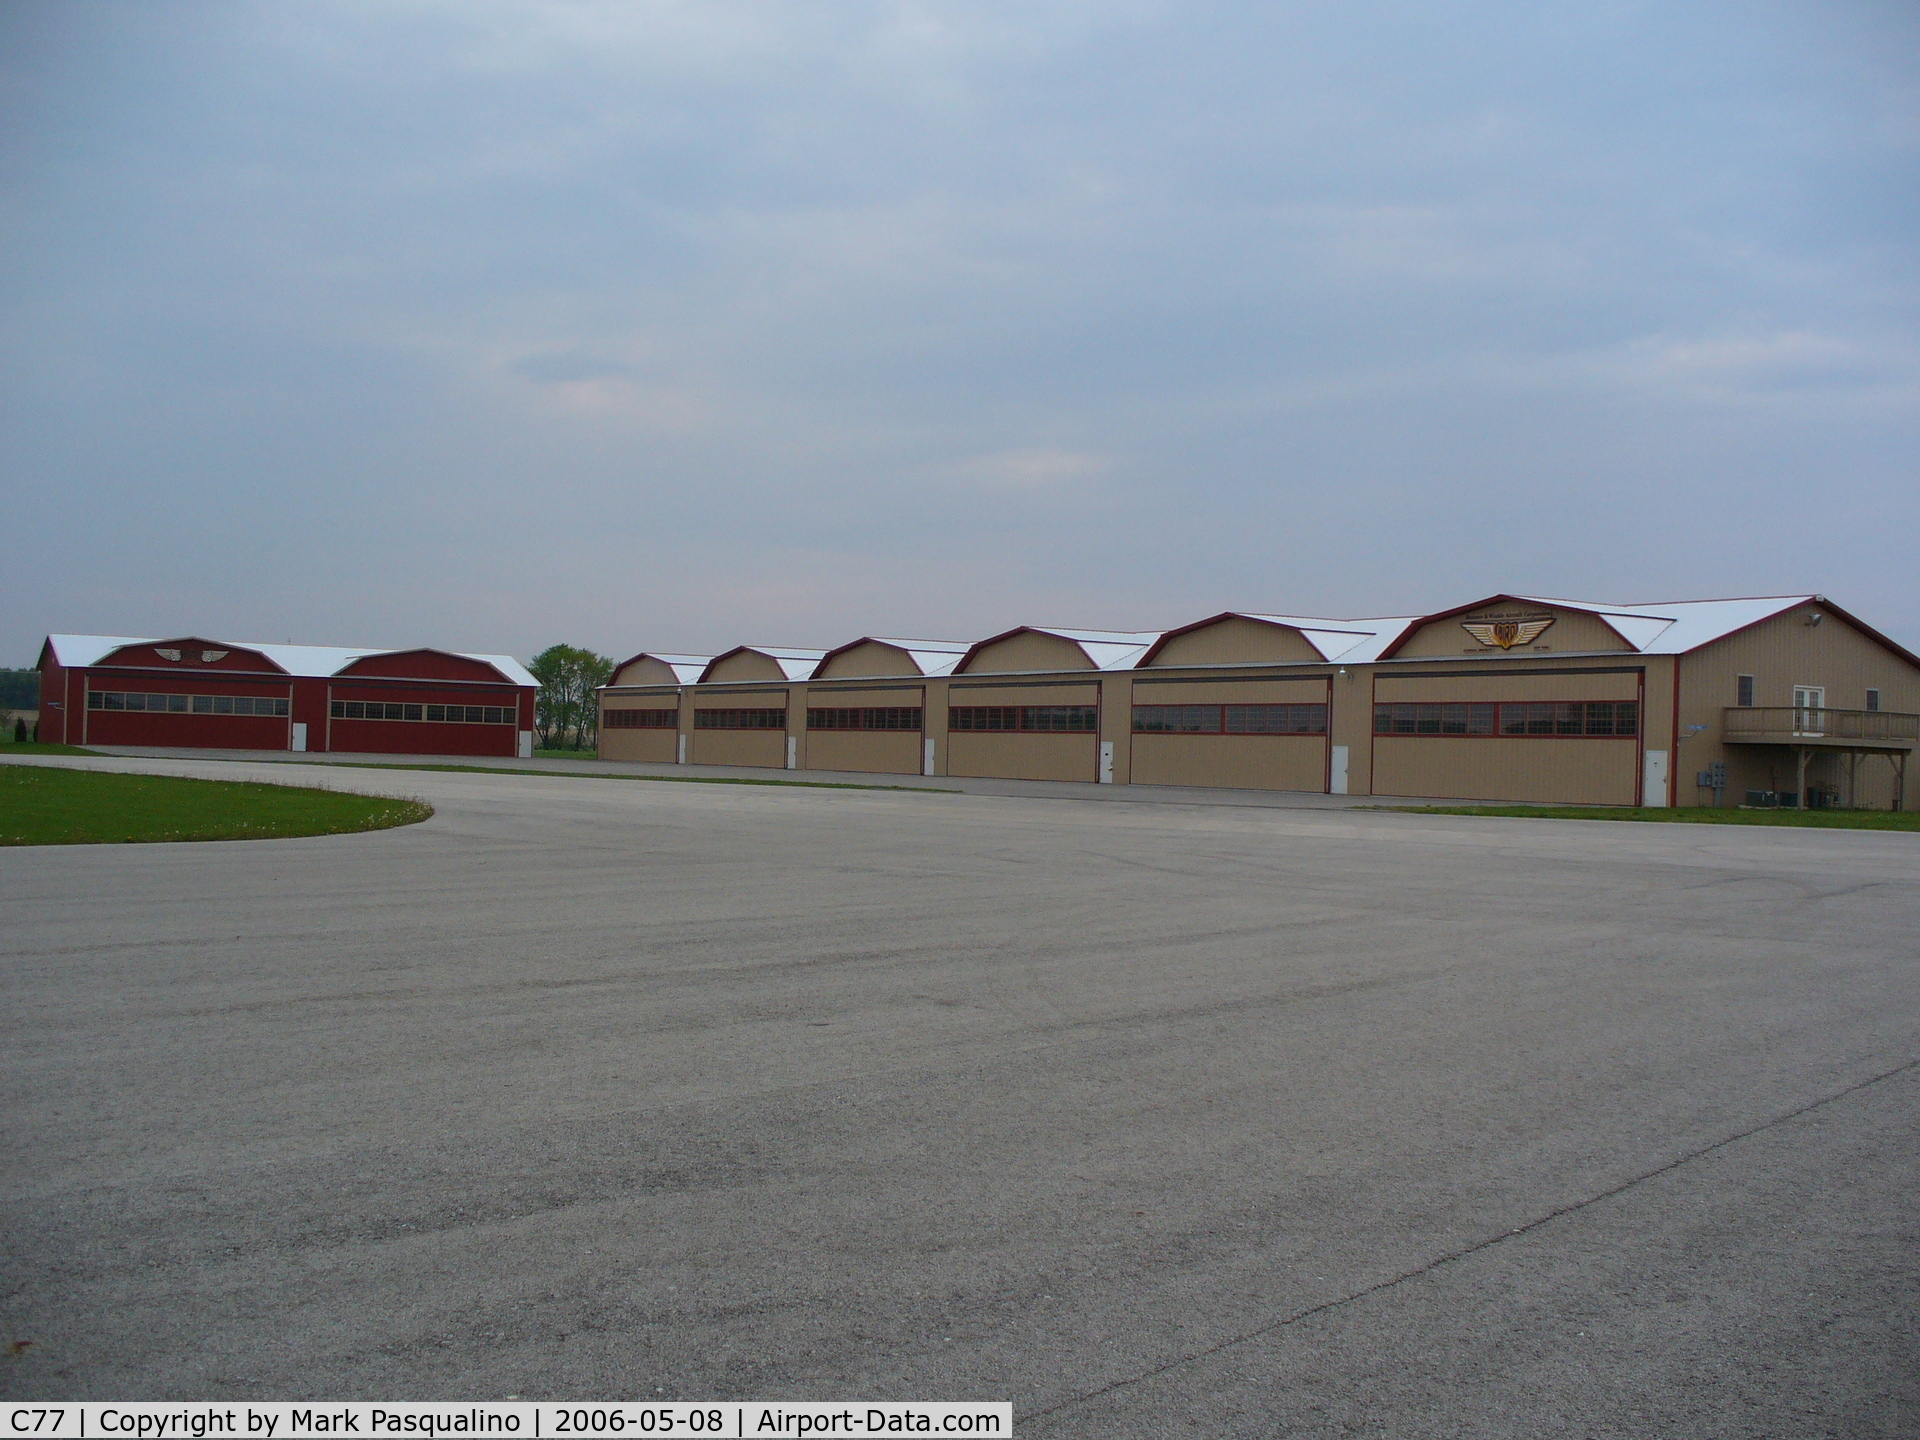 Poplar Grove Airport (C77) - North hangars